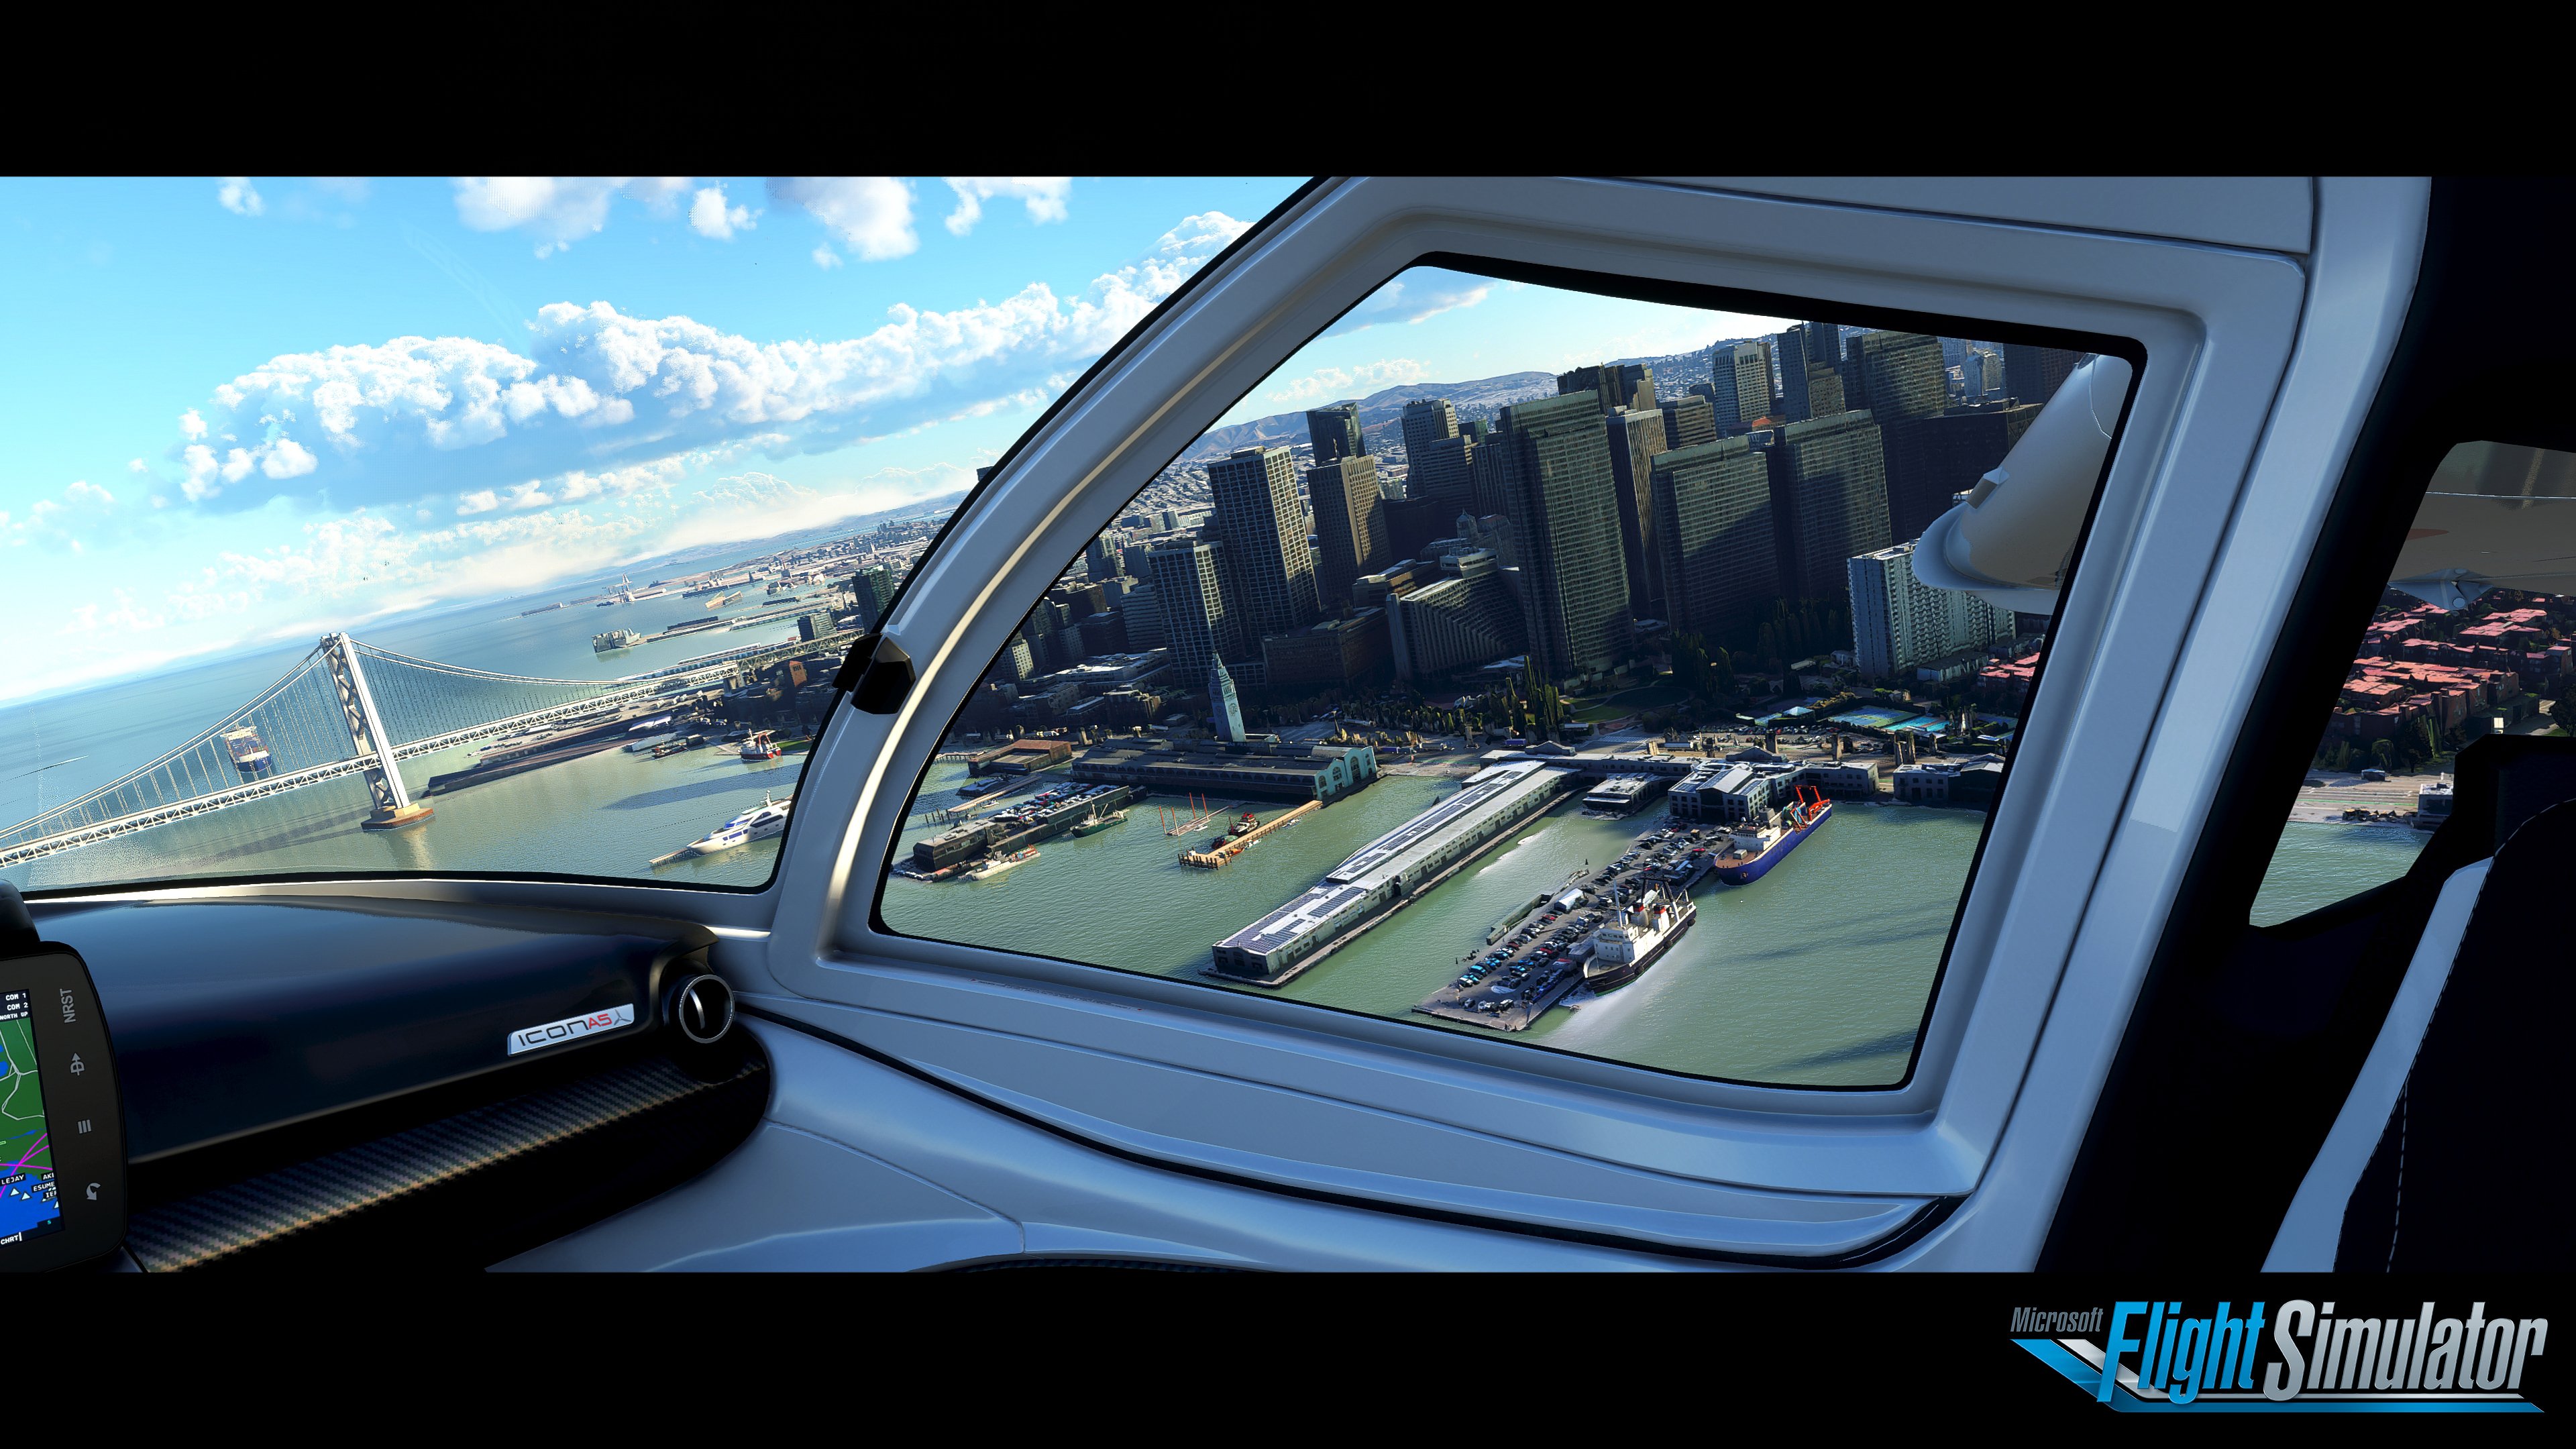 More information about "Microsoft Flight Simulator systeemvereisten"